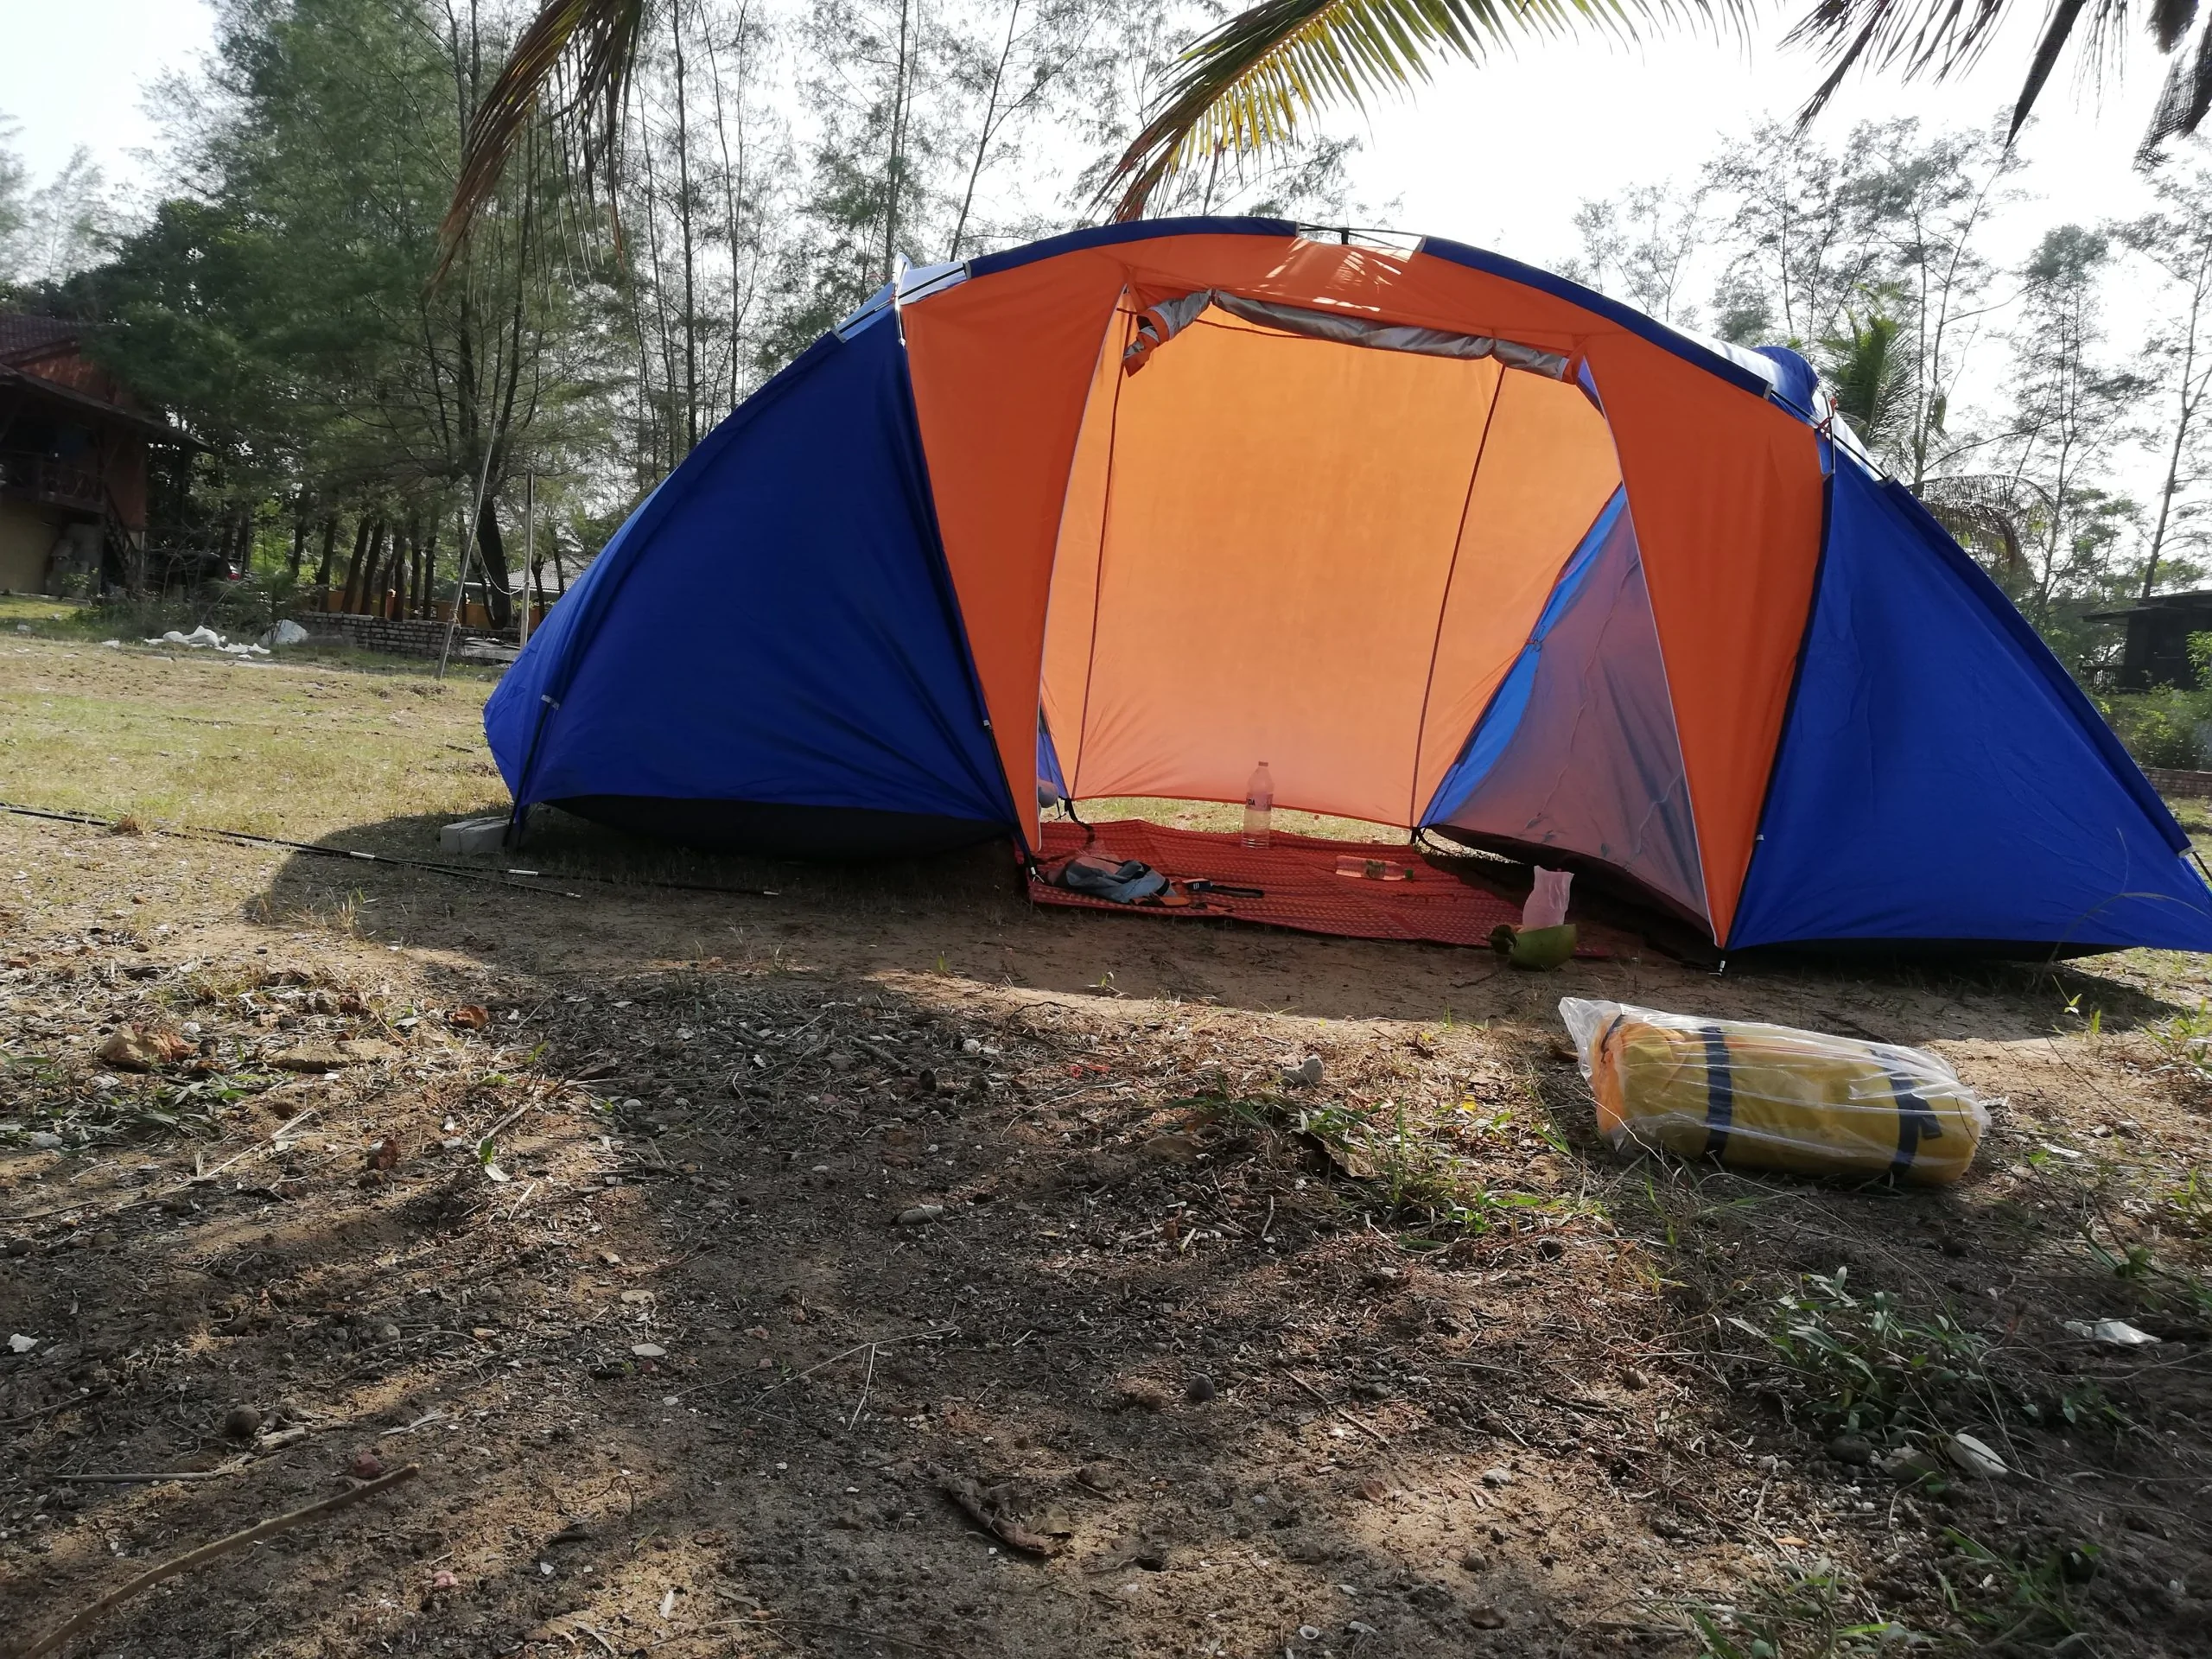 Camping Experience with Cosmic Campers Campsite, Marang Terengganu.